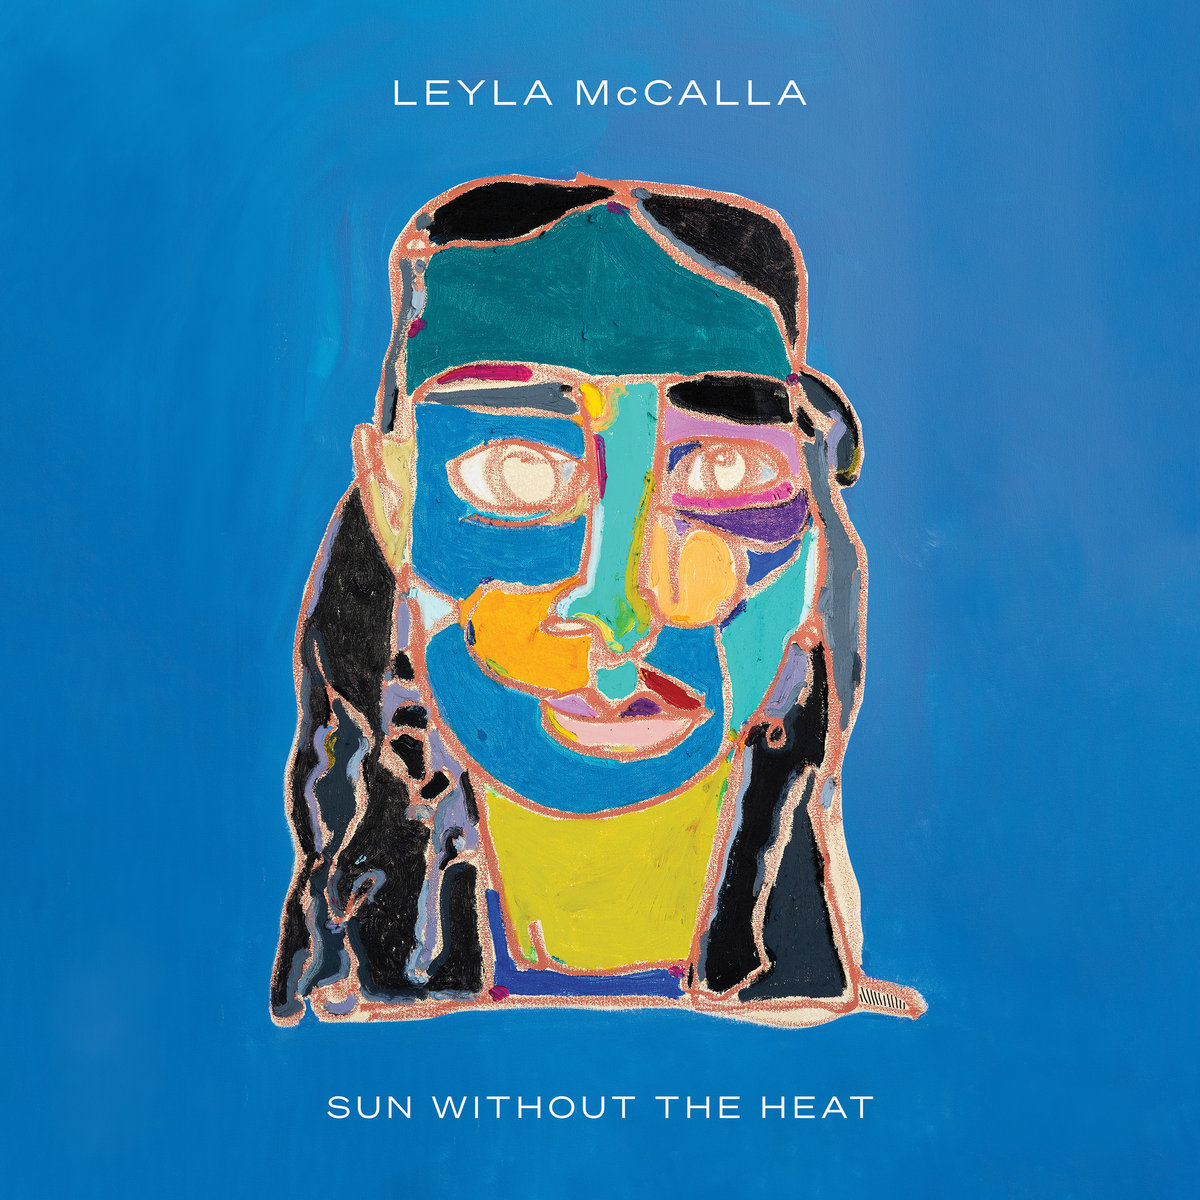 MC CALLA, LEYLA - SUN WITHOUT THE HEAT - LP